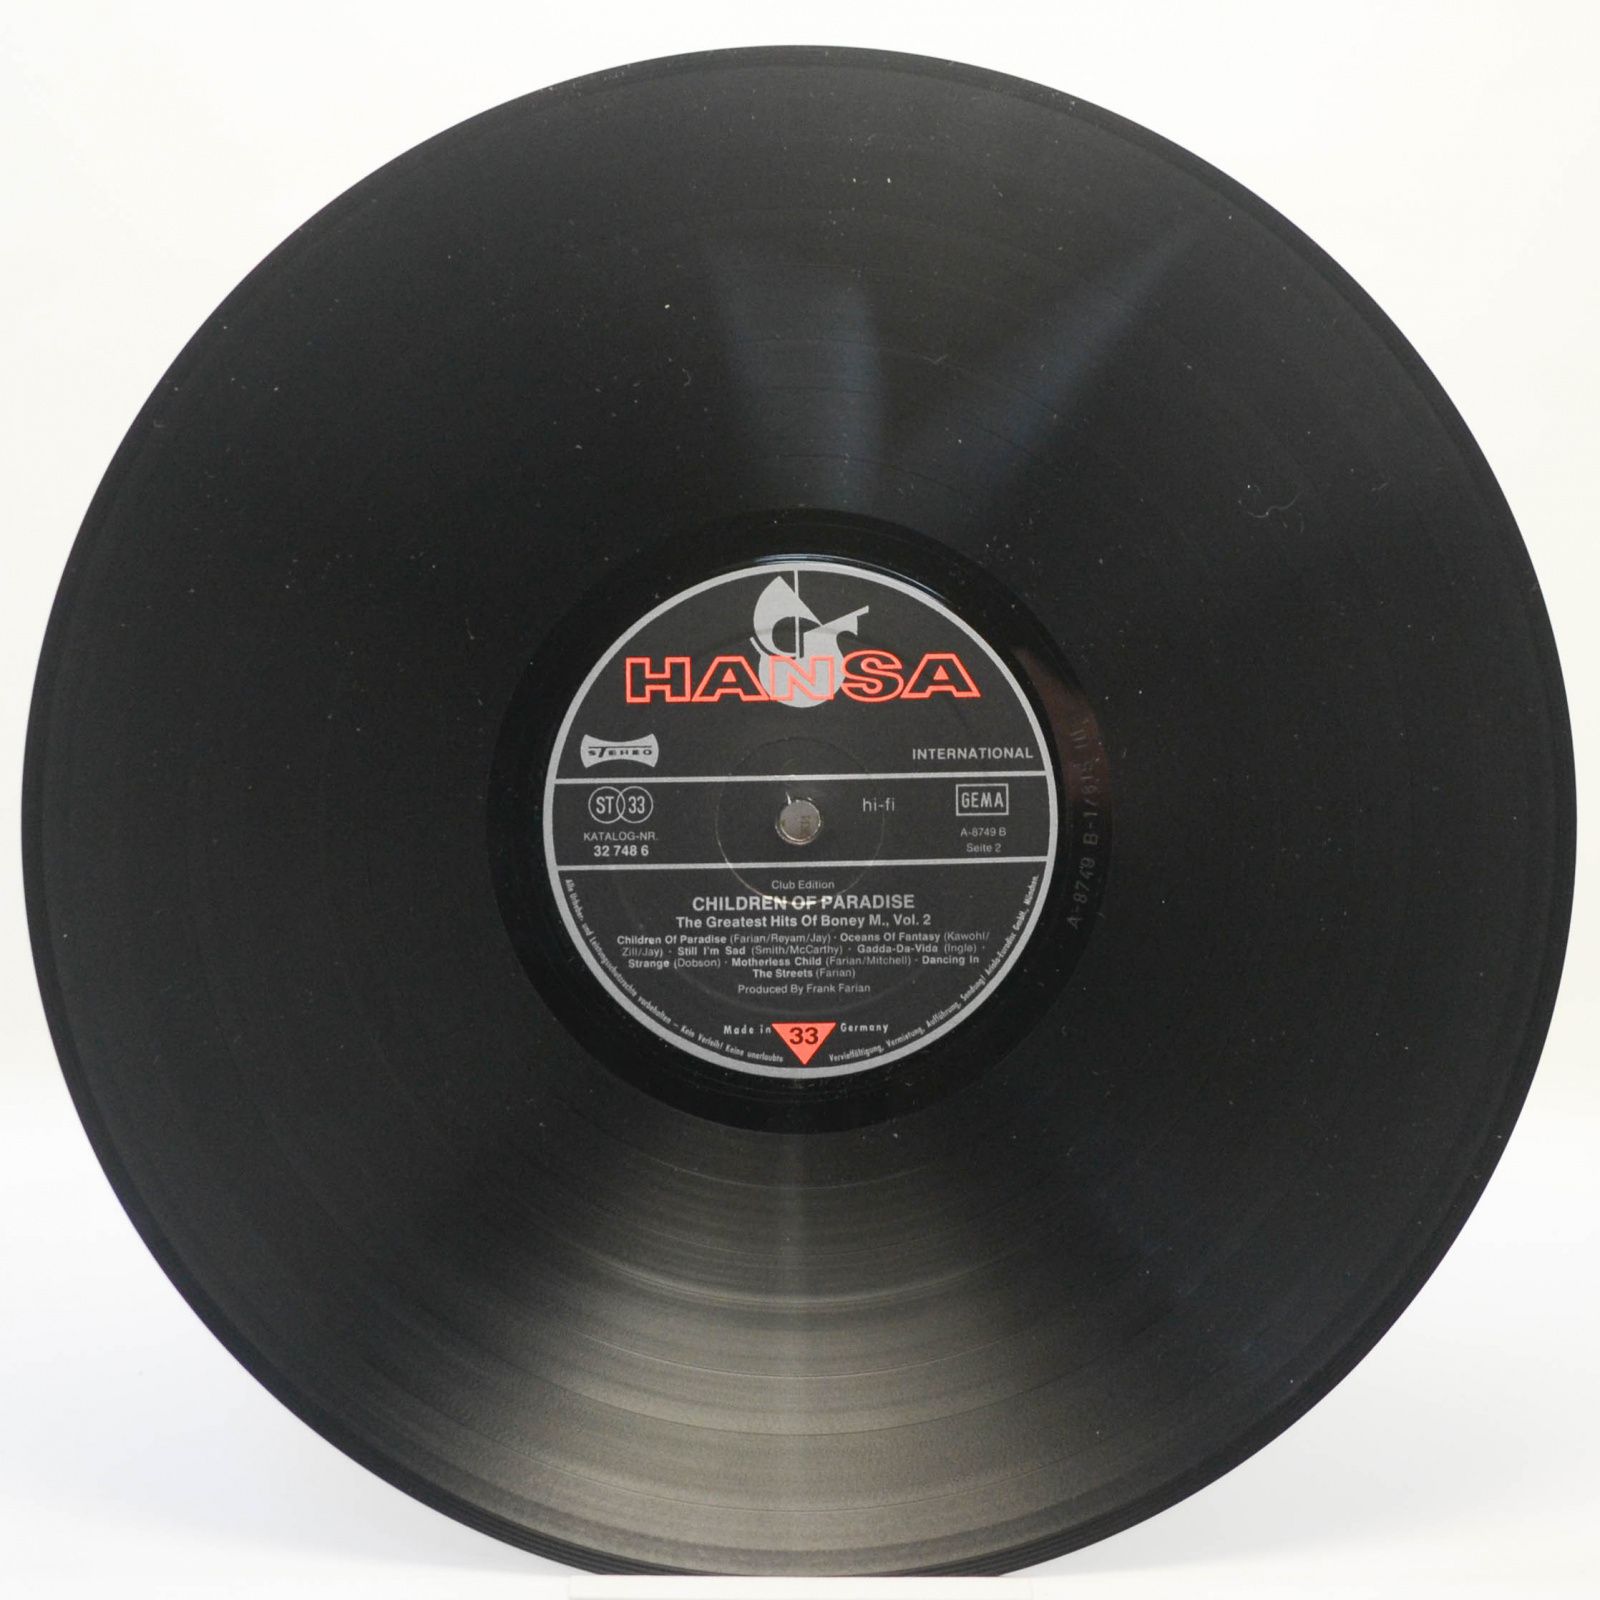 Boney M. — Children Of Paradise - The Greatest Hits Of - Volume 2, 1981